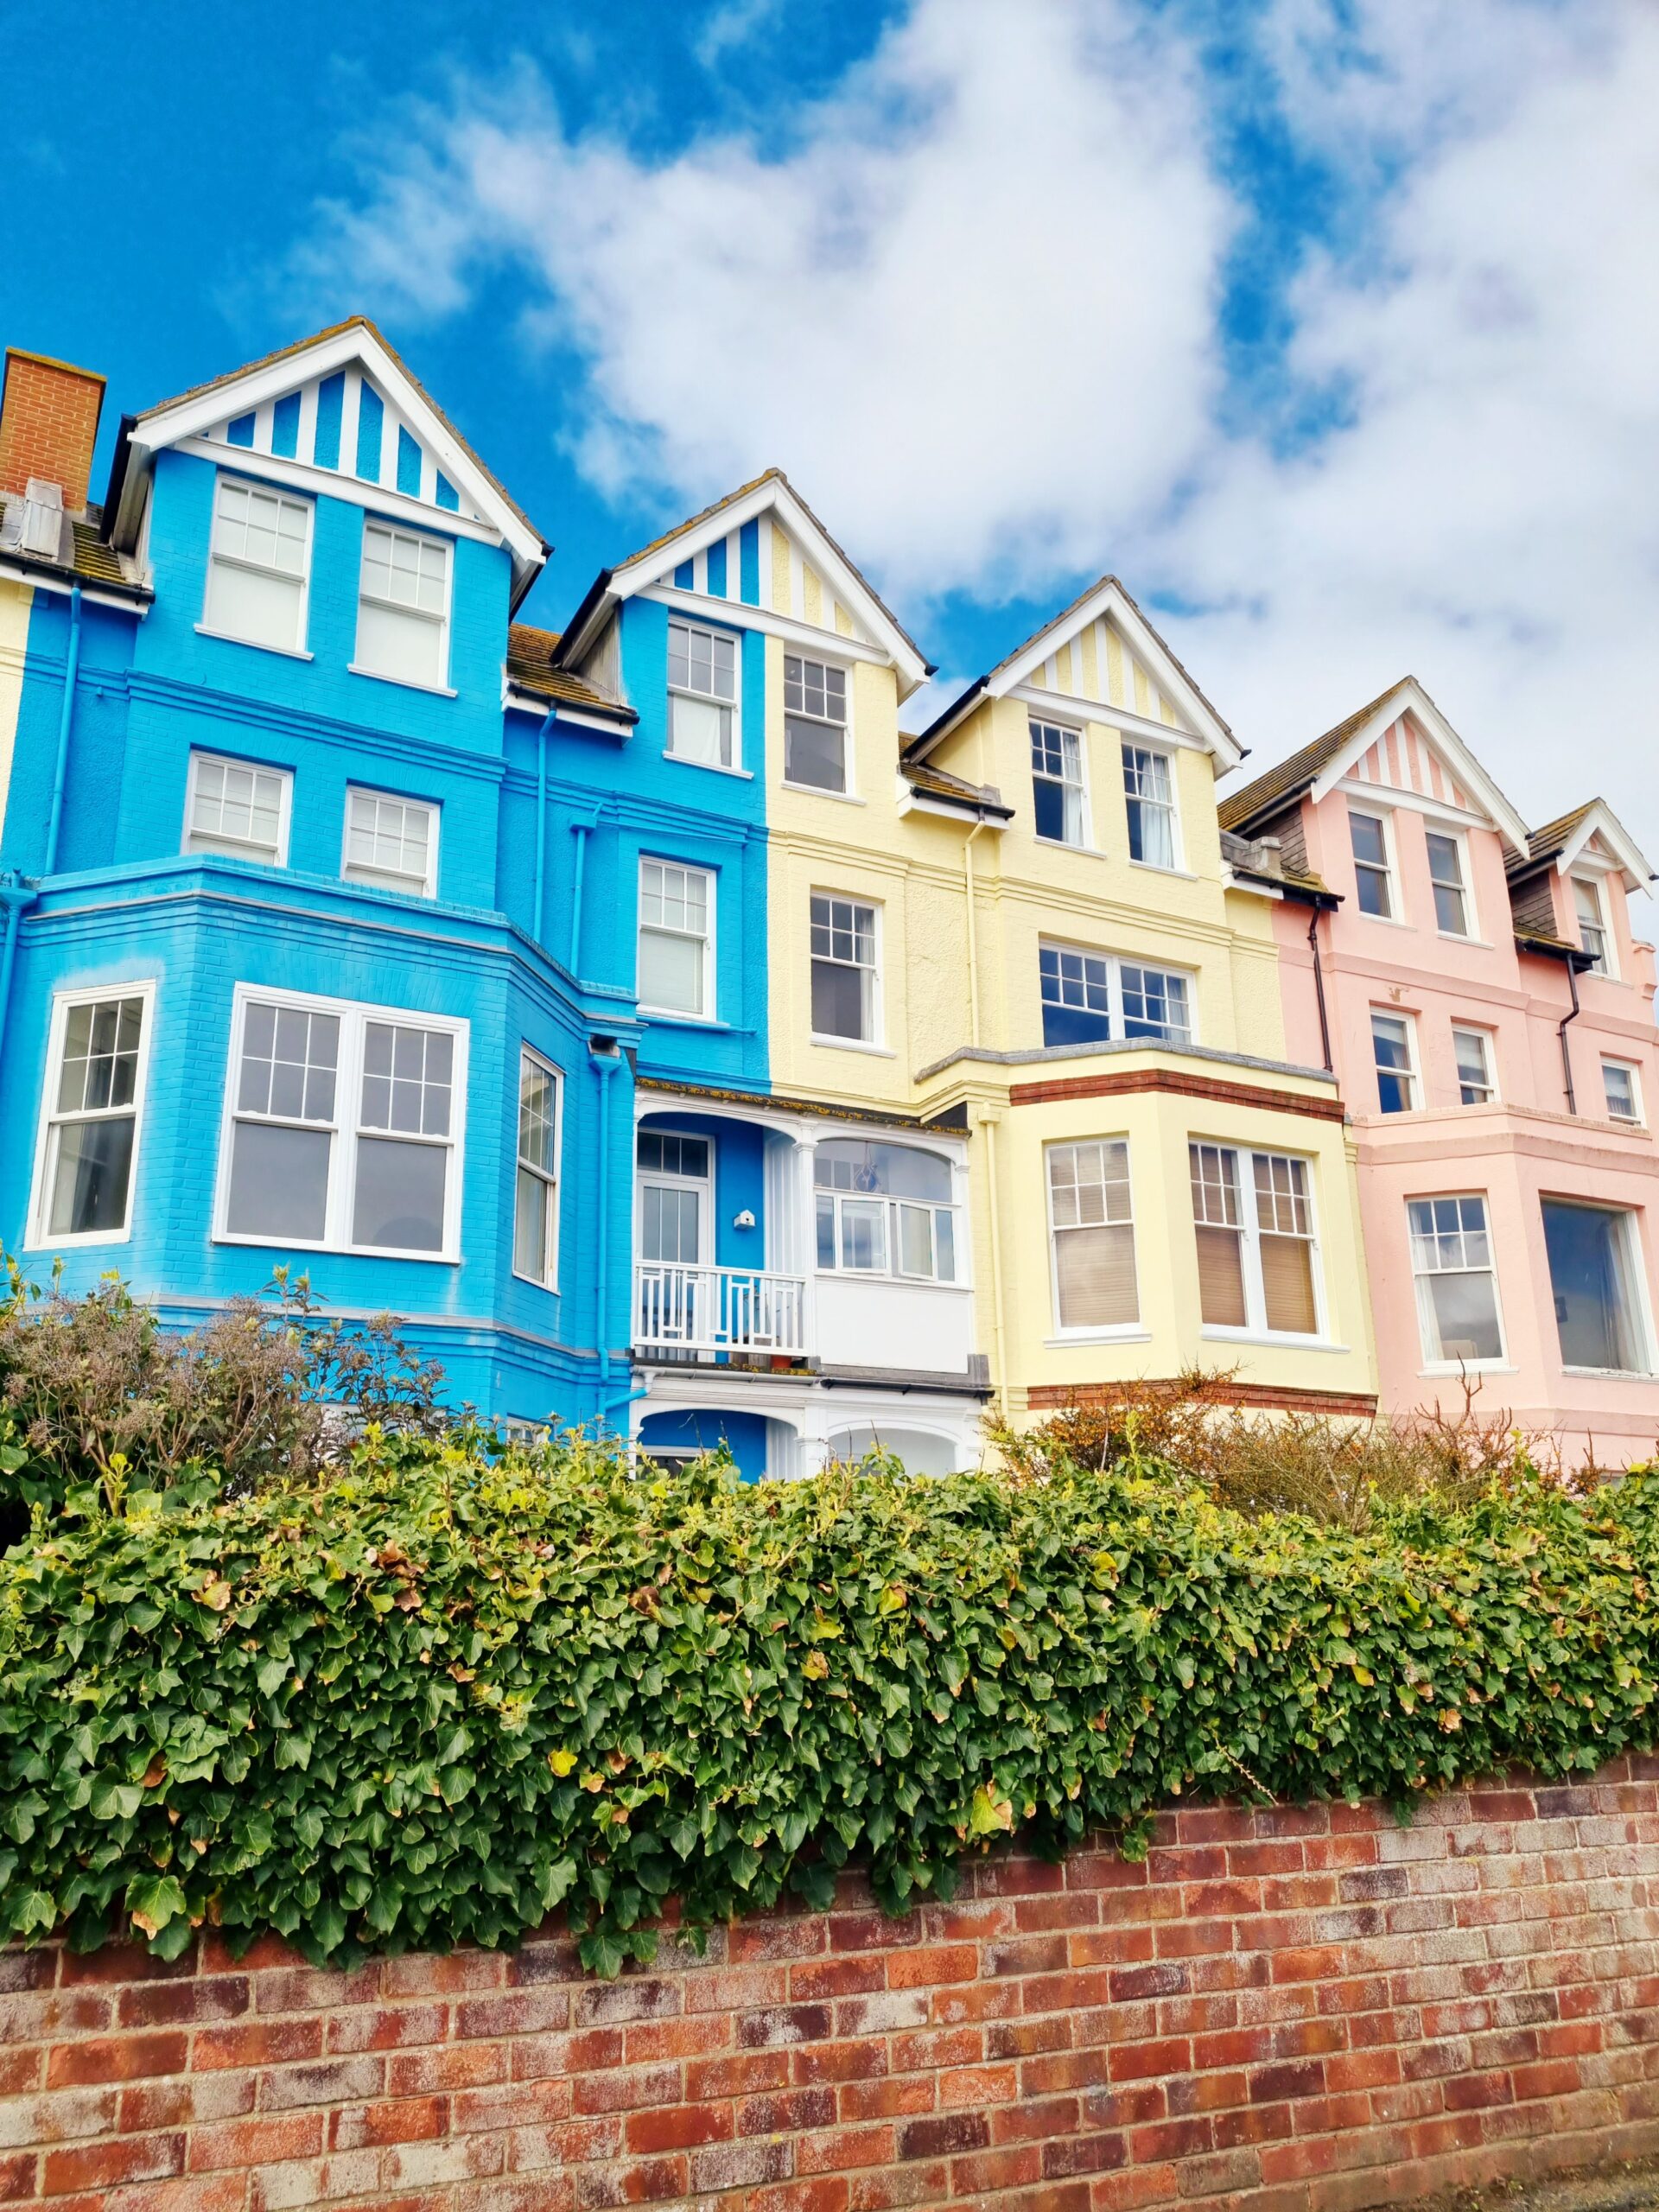 <img src="pastel.jpg" alt="pastel villas date ideas Aldeburgh"/>